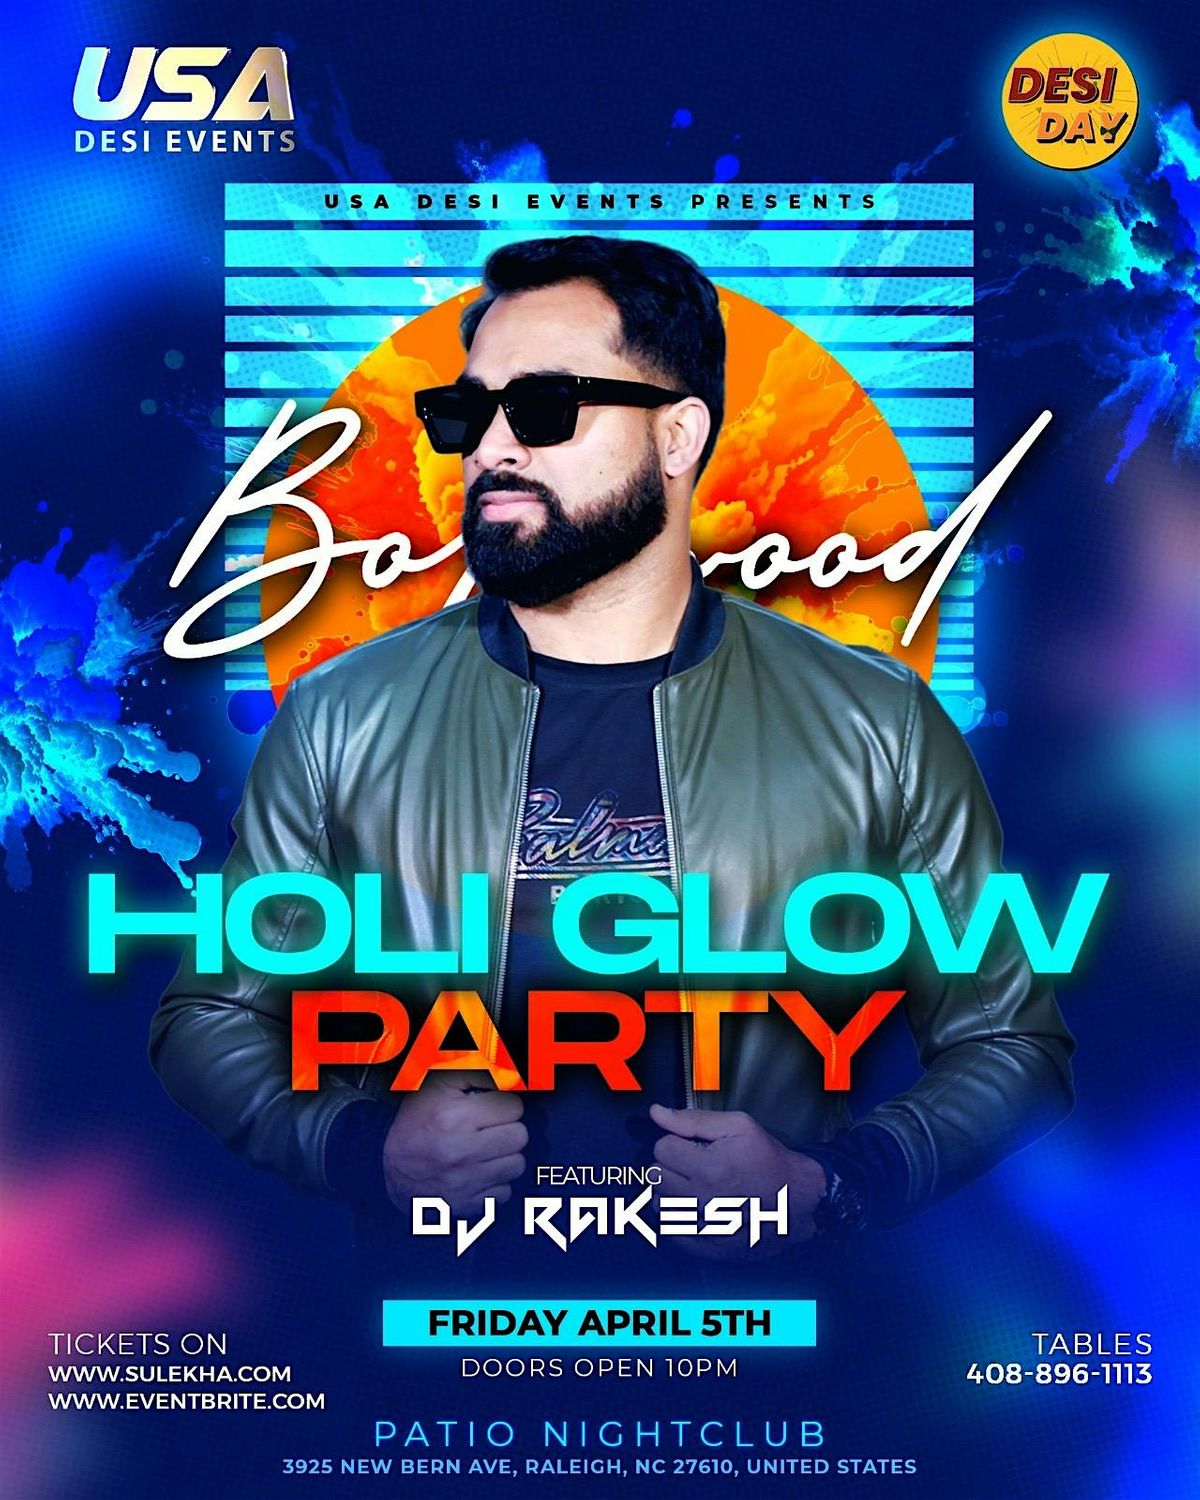 Holi Glow Party Bollywood Style - DJ Rakesh